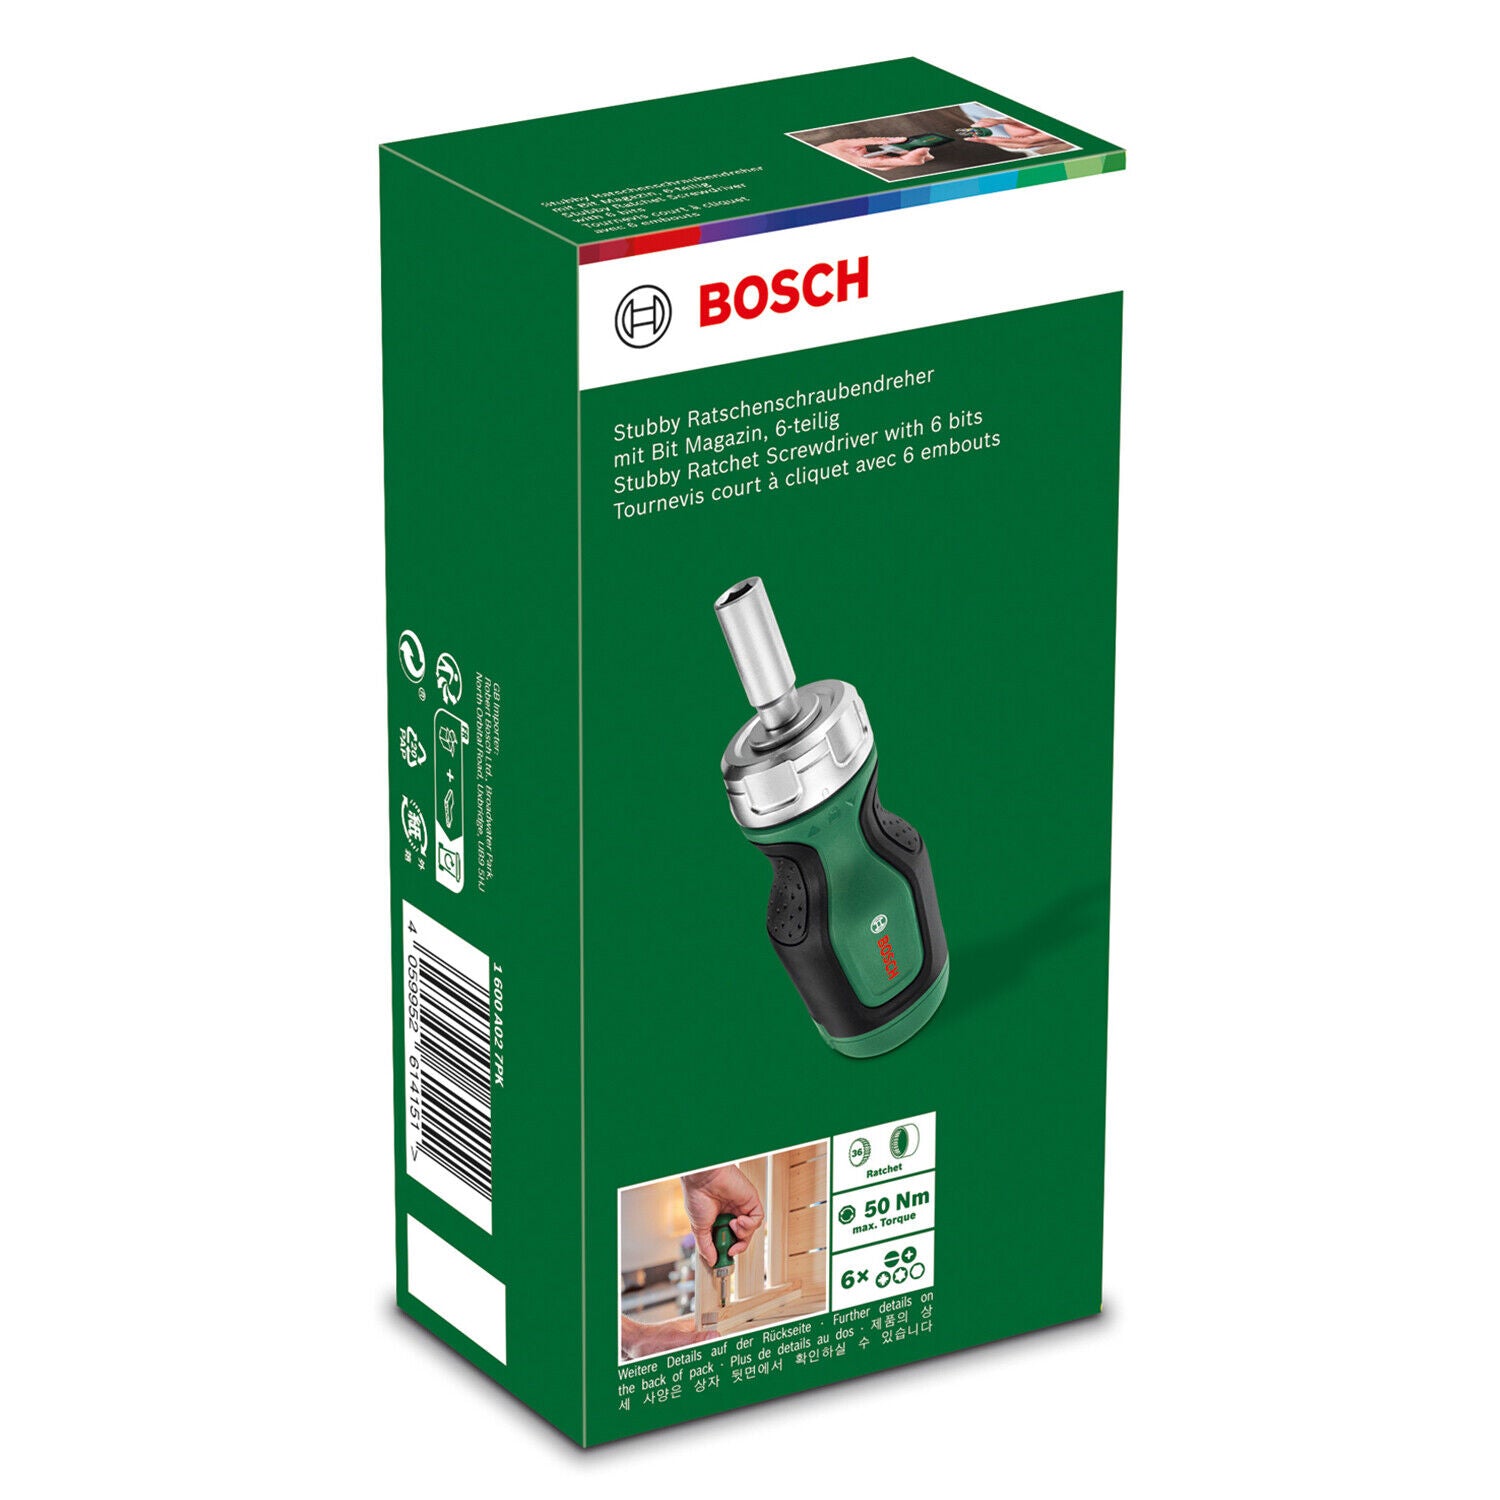 Bosch DIY Stubby Ratchet Screwdriver with 6 Bits 1600A027PK